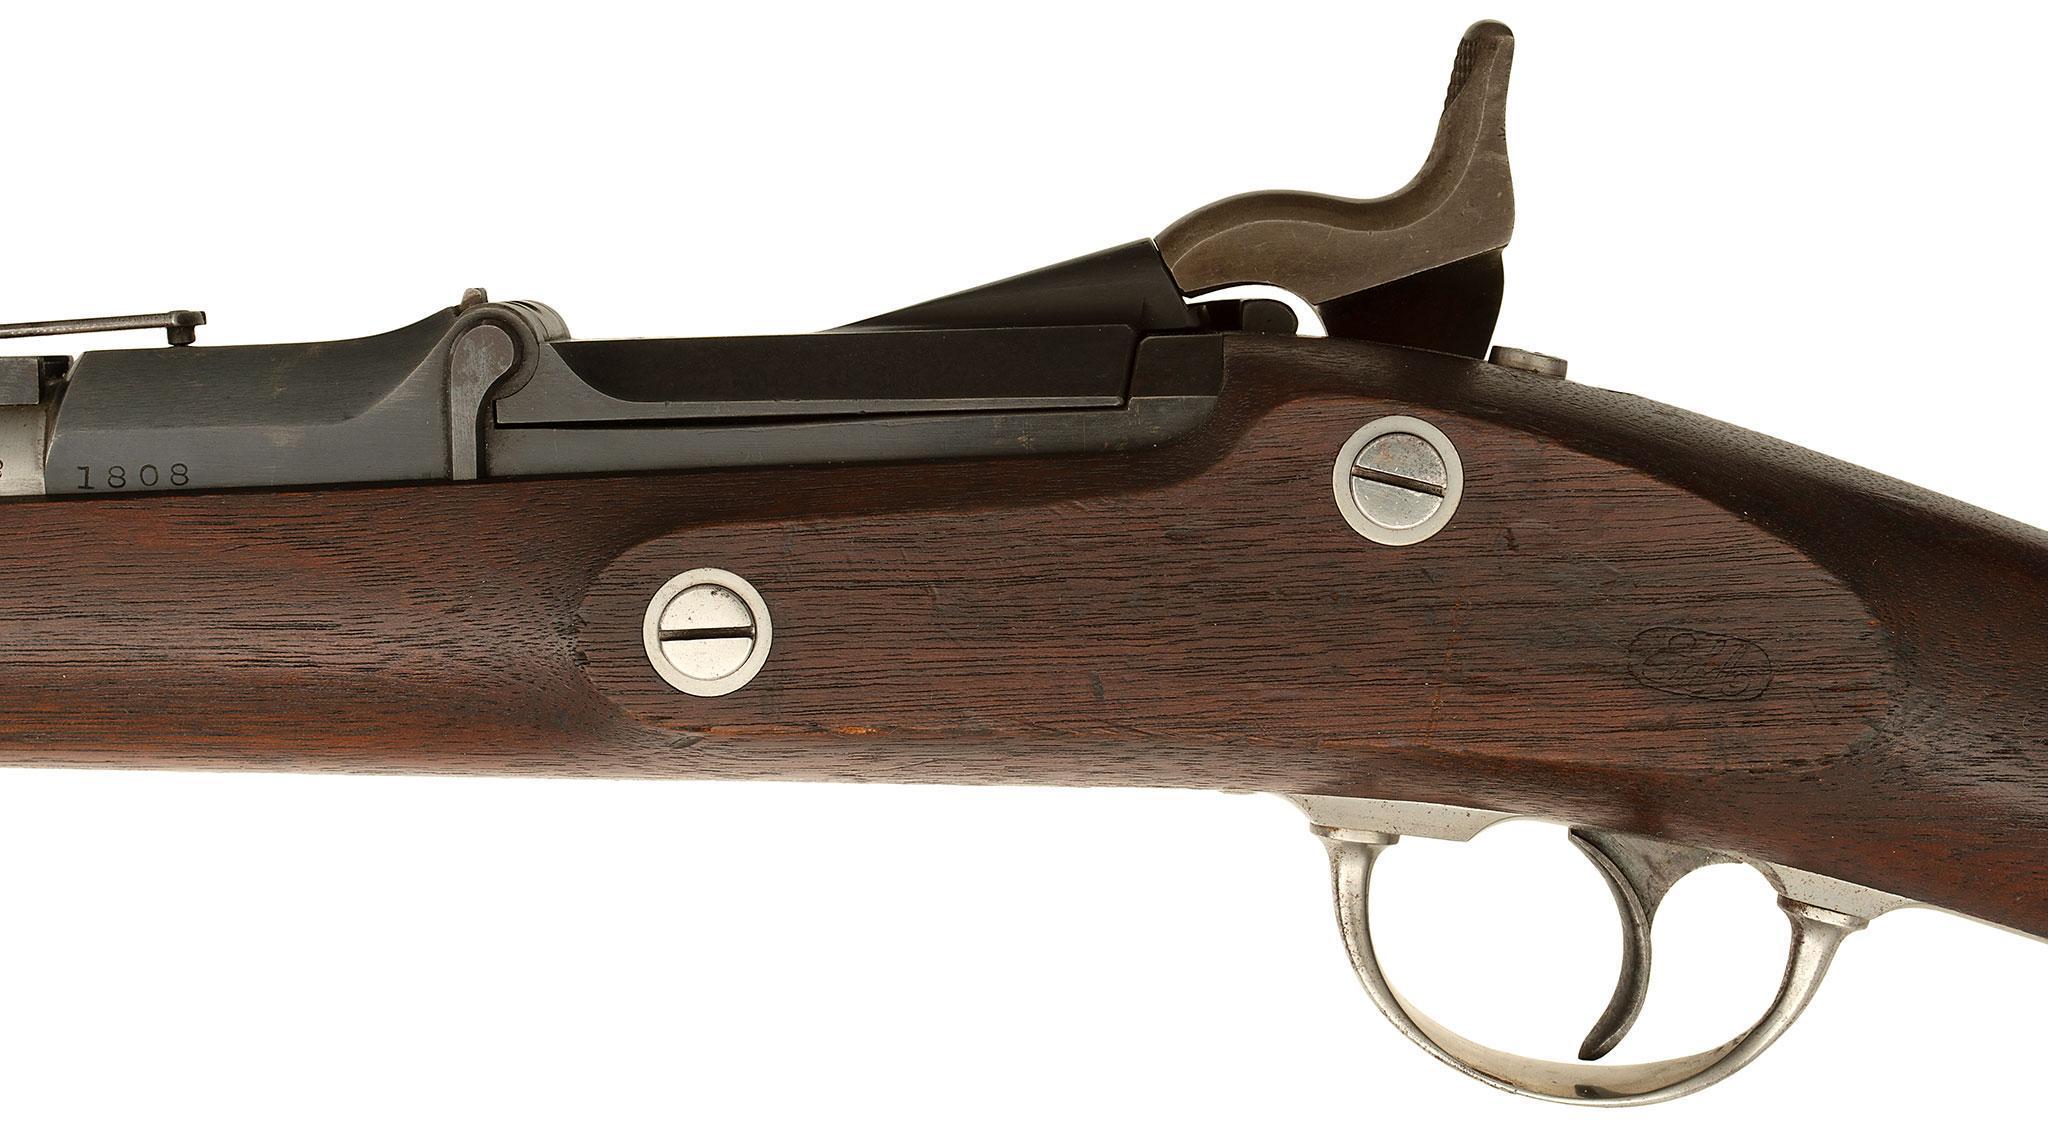 Springfield Model 1869 Cadet Rifle